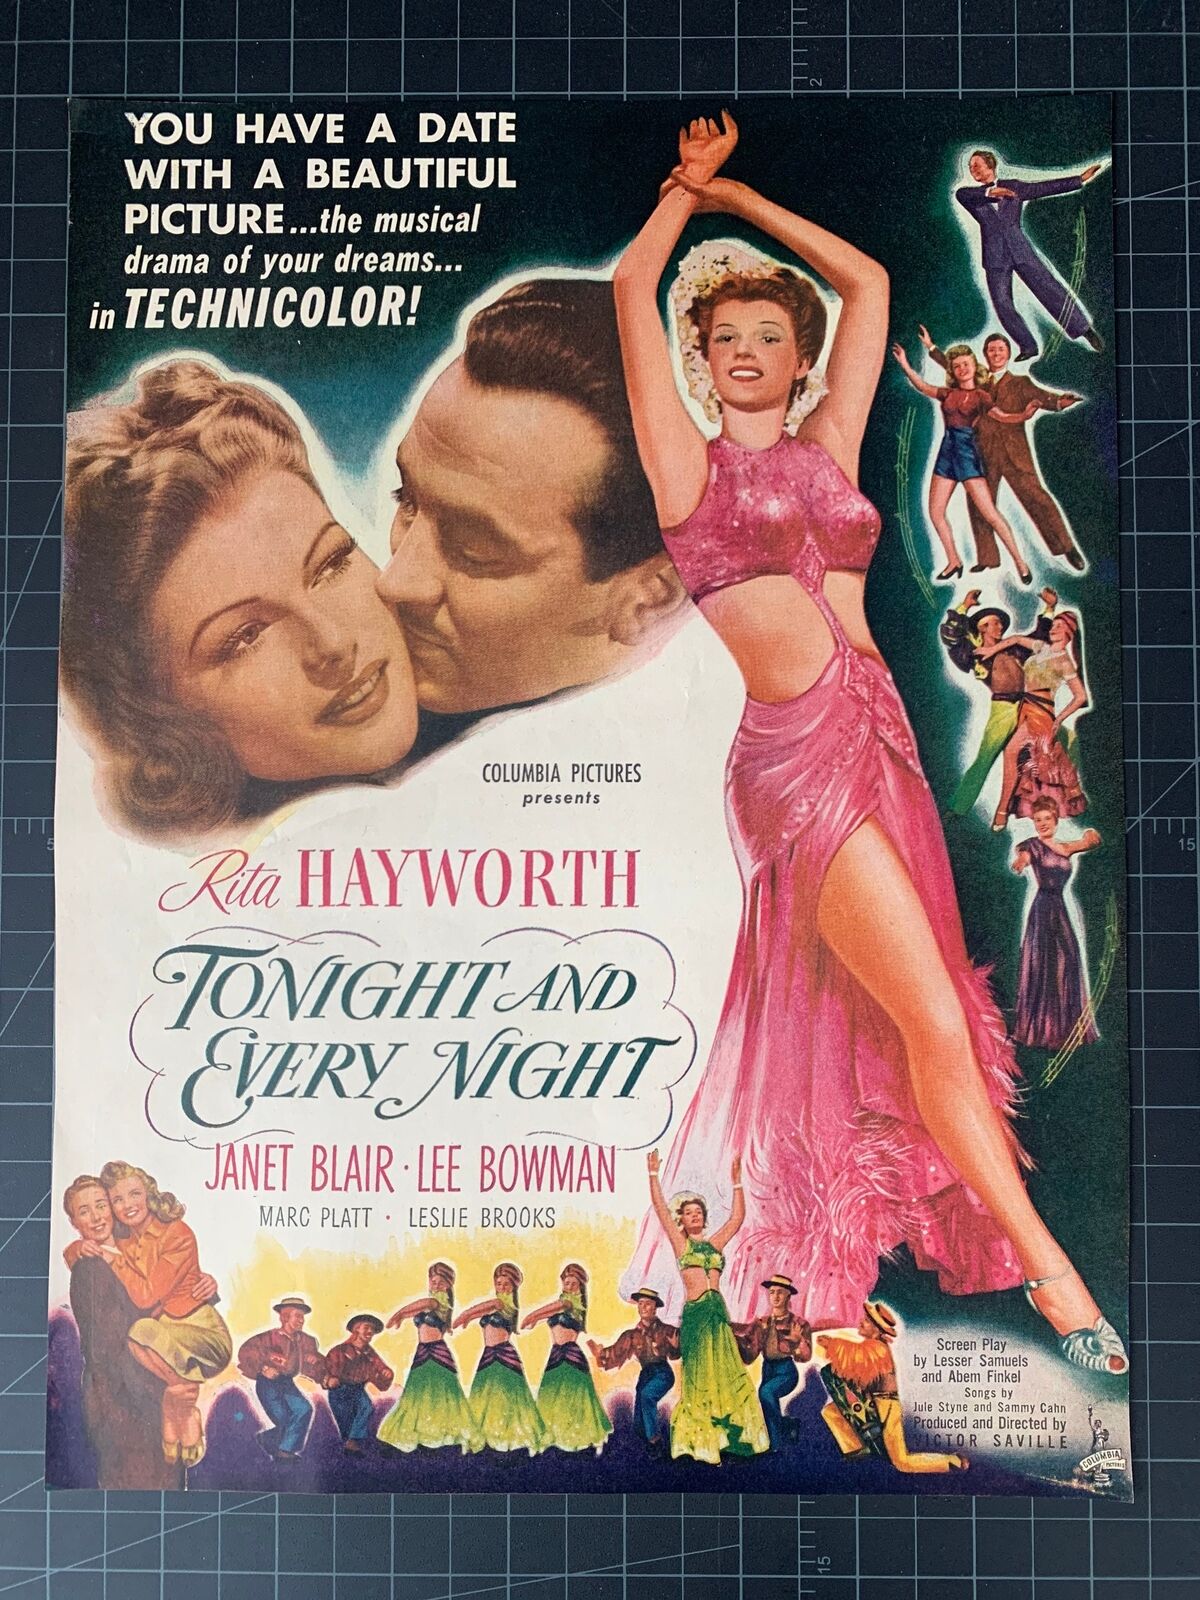 Vintage 1945 “Tonight and Every Night” Film Print Ad - Rita Hayworth